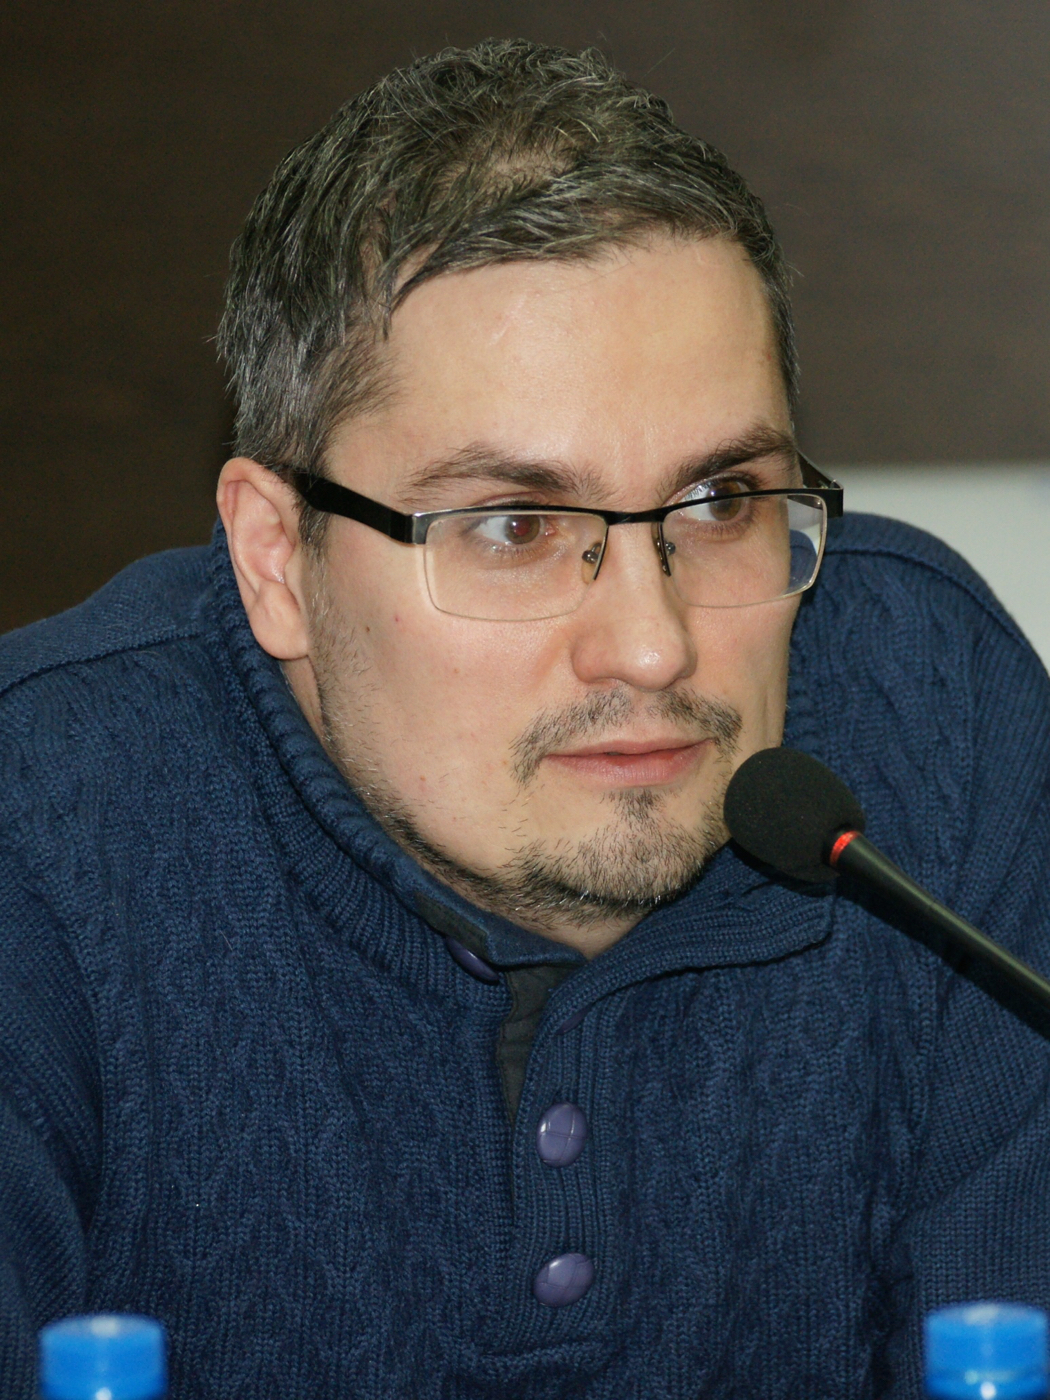 Иван Иванович Макаров— модератор, глава комитета по работе со СМИ Ассоциации Банков Северо-Запада, представитель банка ВТБ